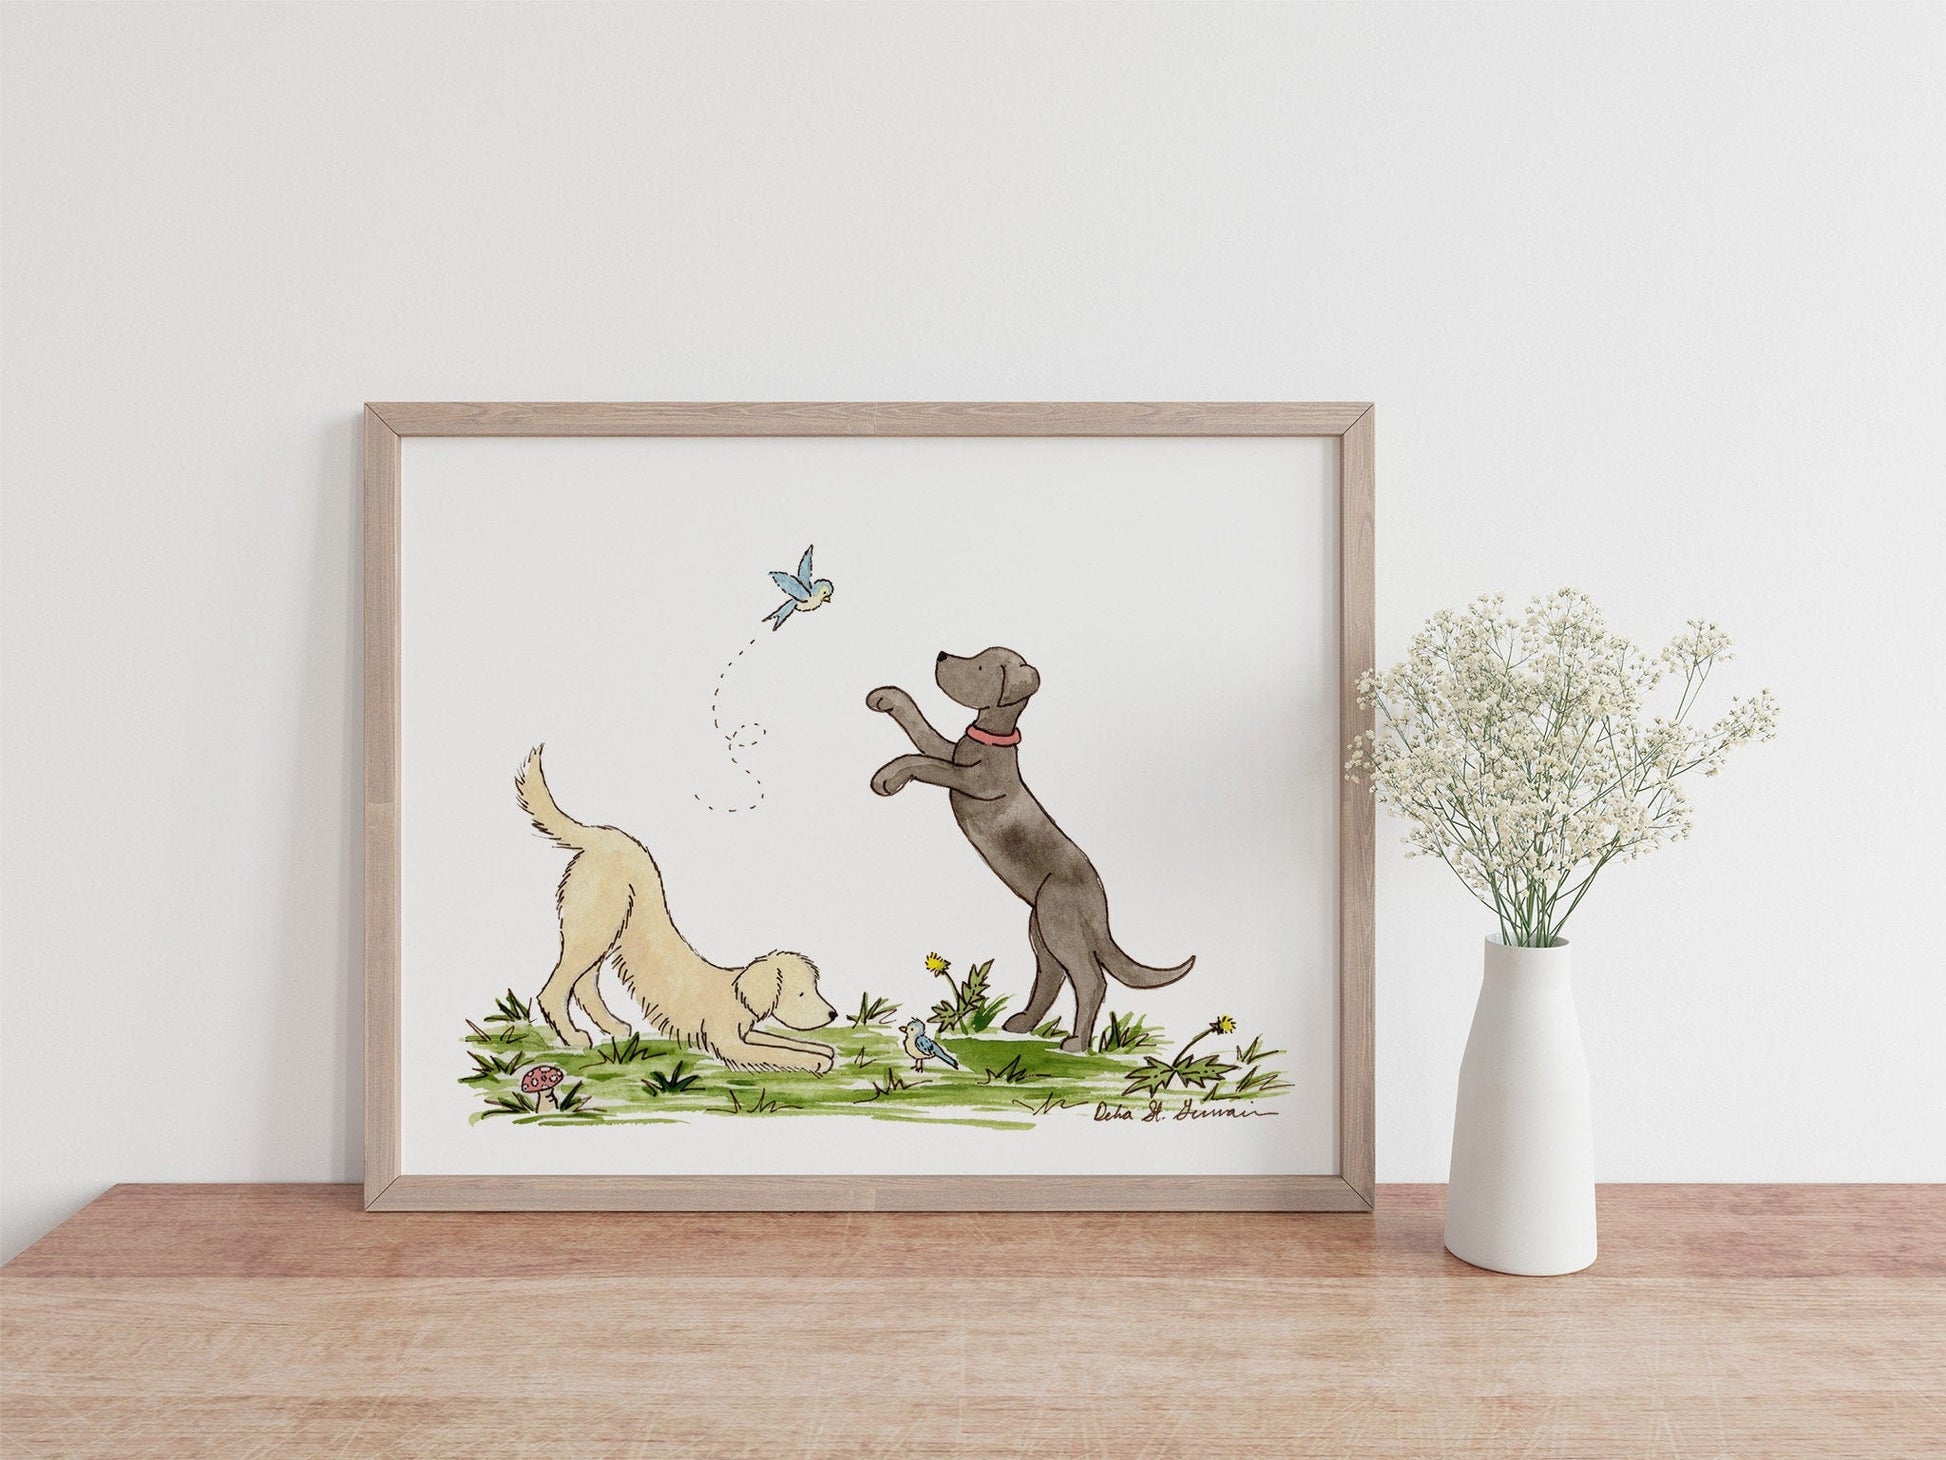 Framed Puppy Nursery Decor, Dog Baby Room Art